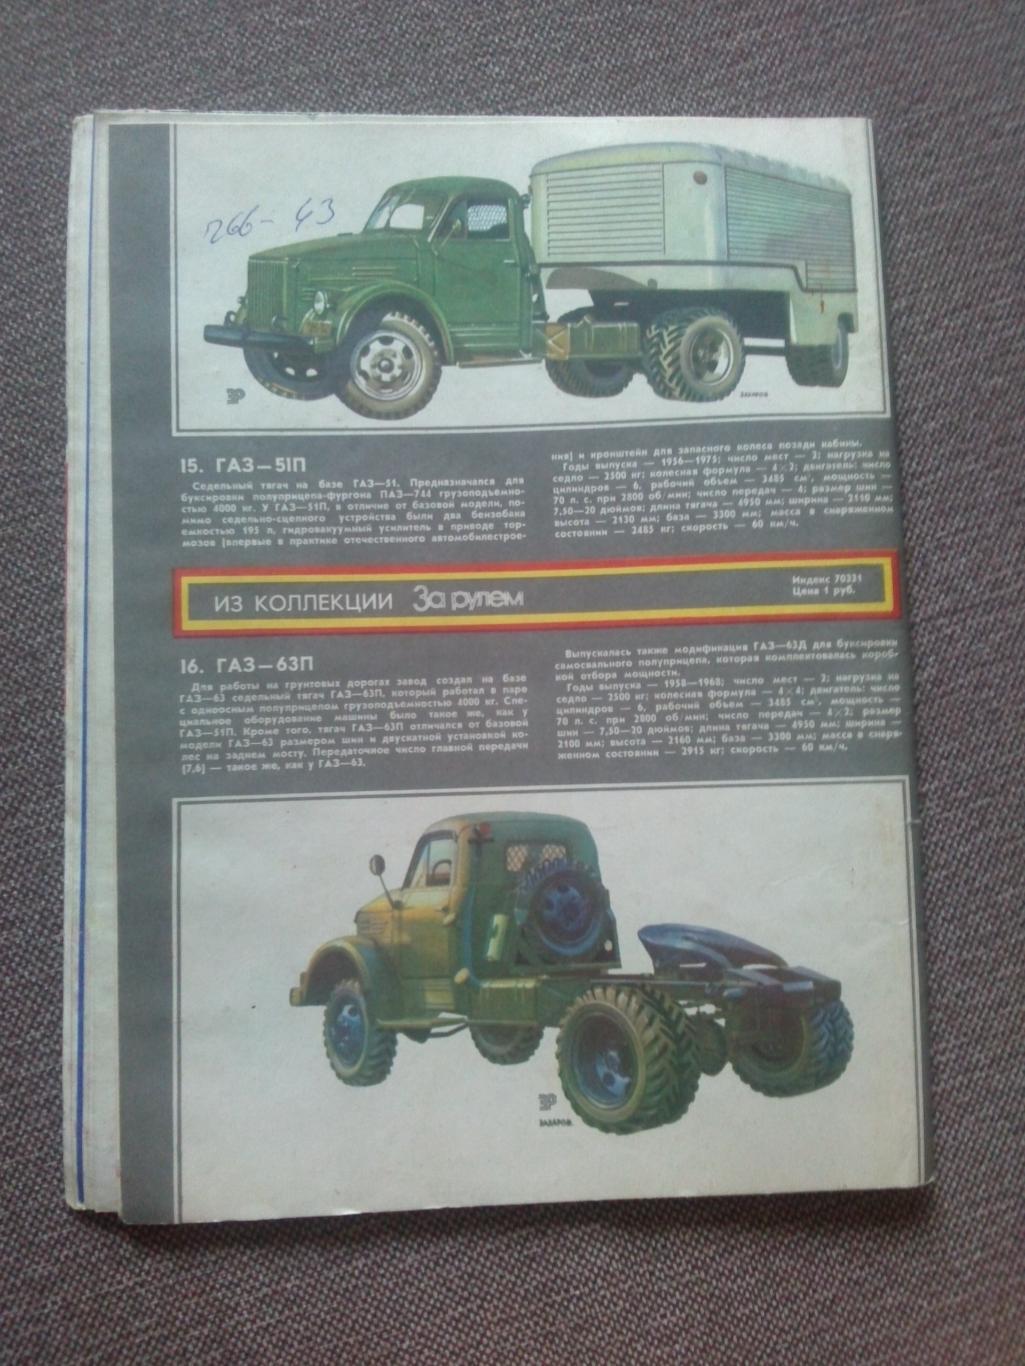 Журнал СССР :За рулем№ 8 ( август ) 1982 г. ( Автомобиль , транспорт ) 1